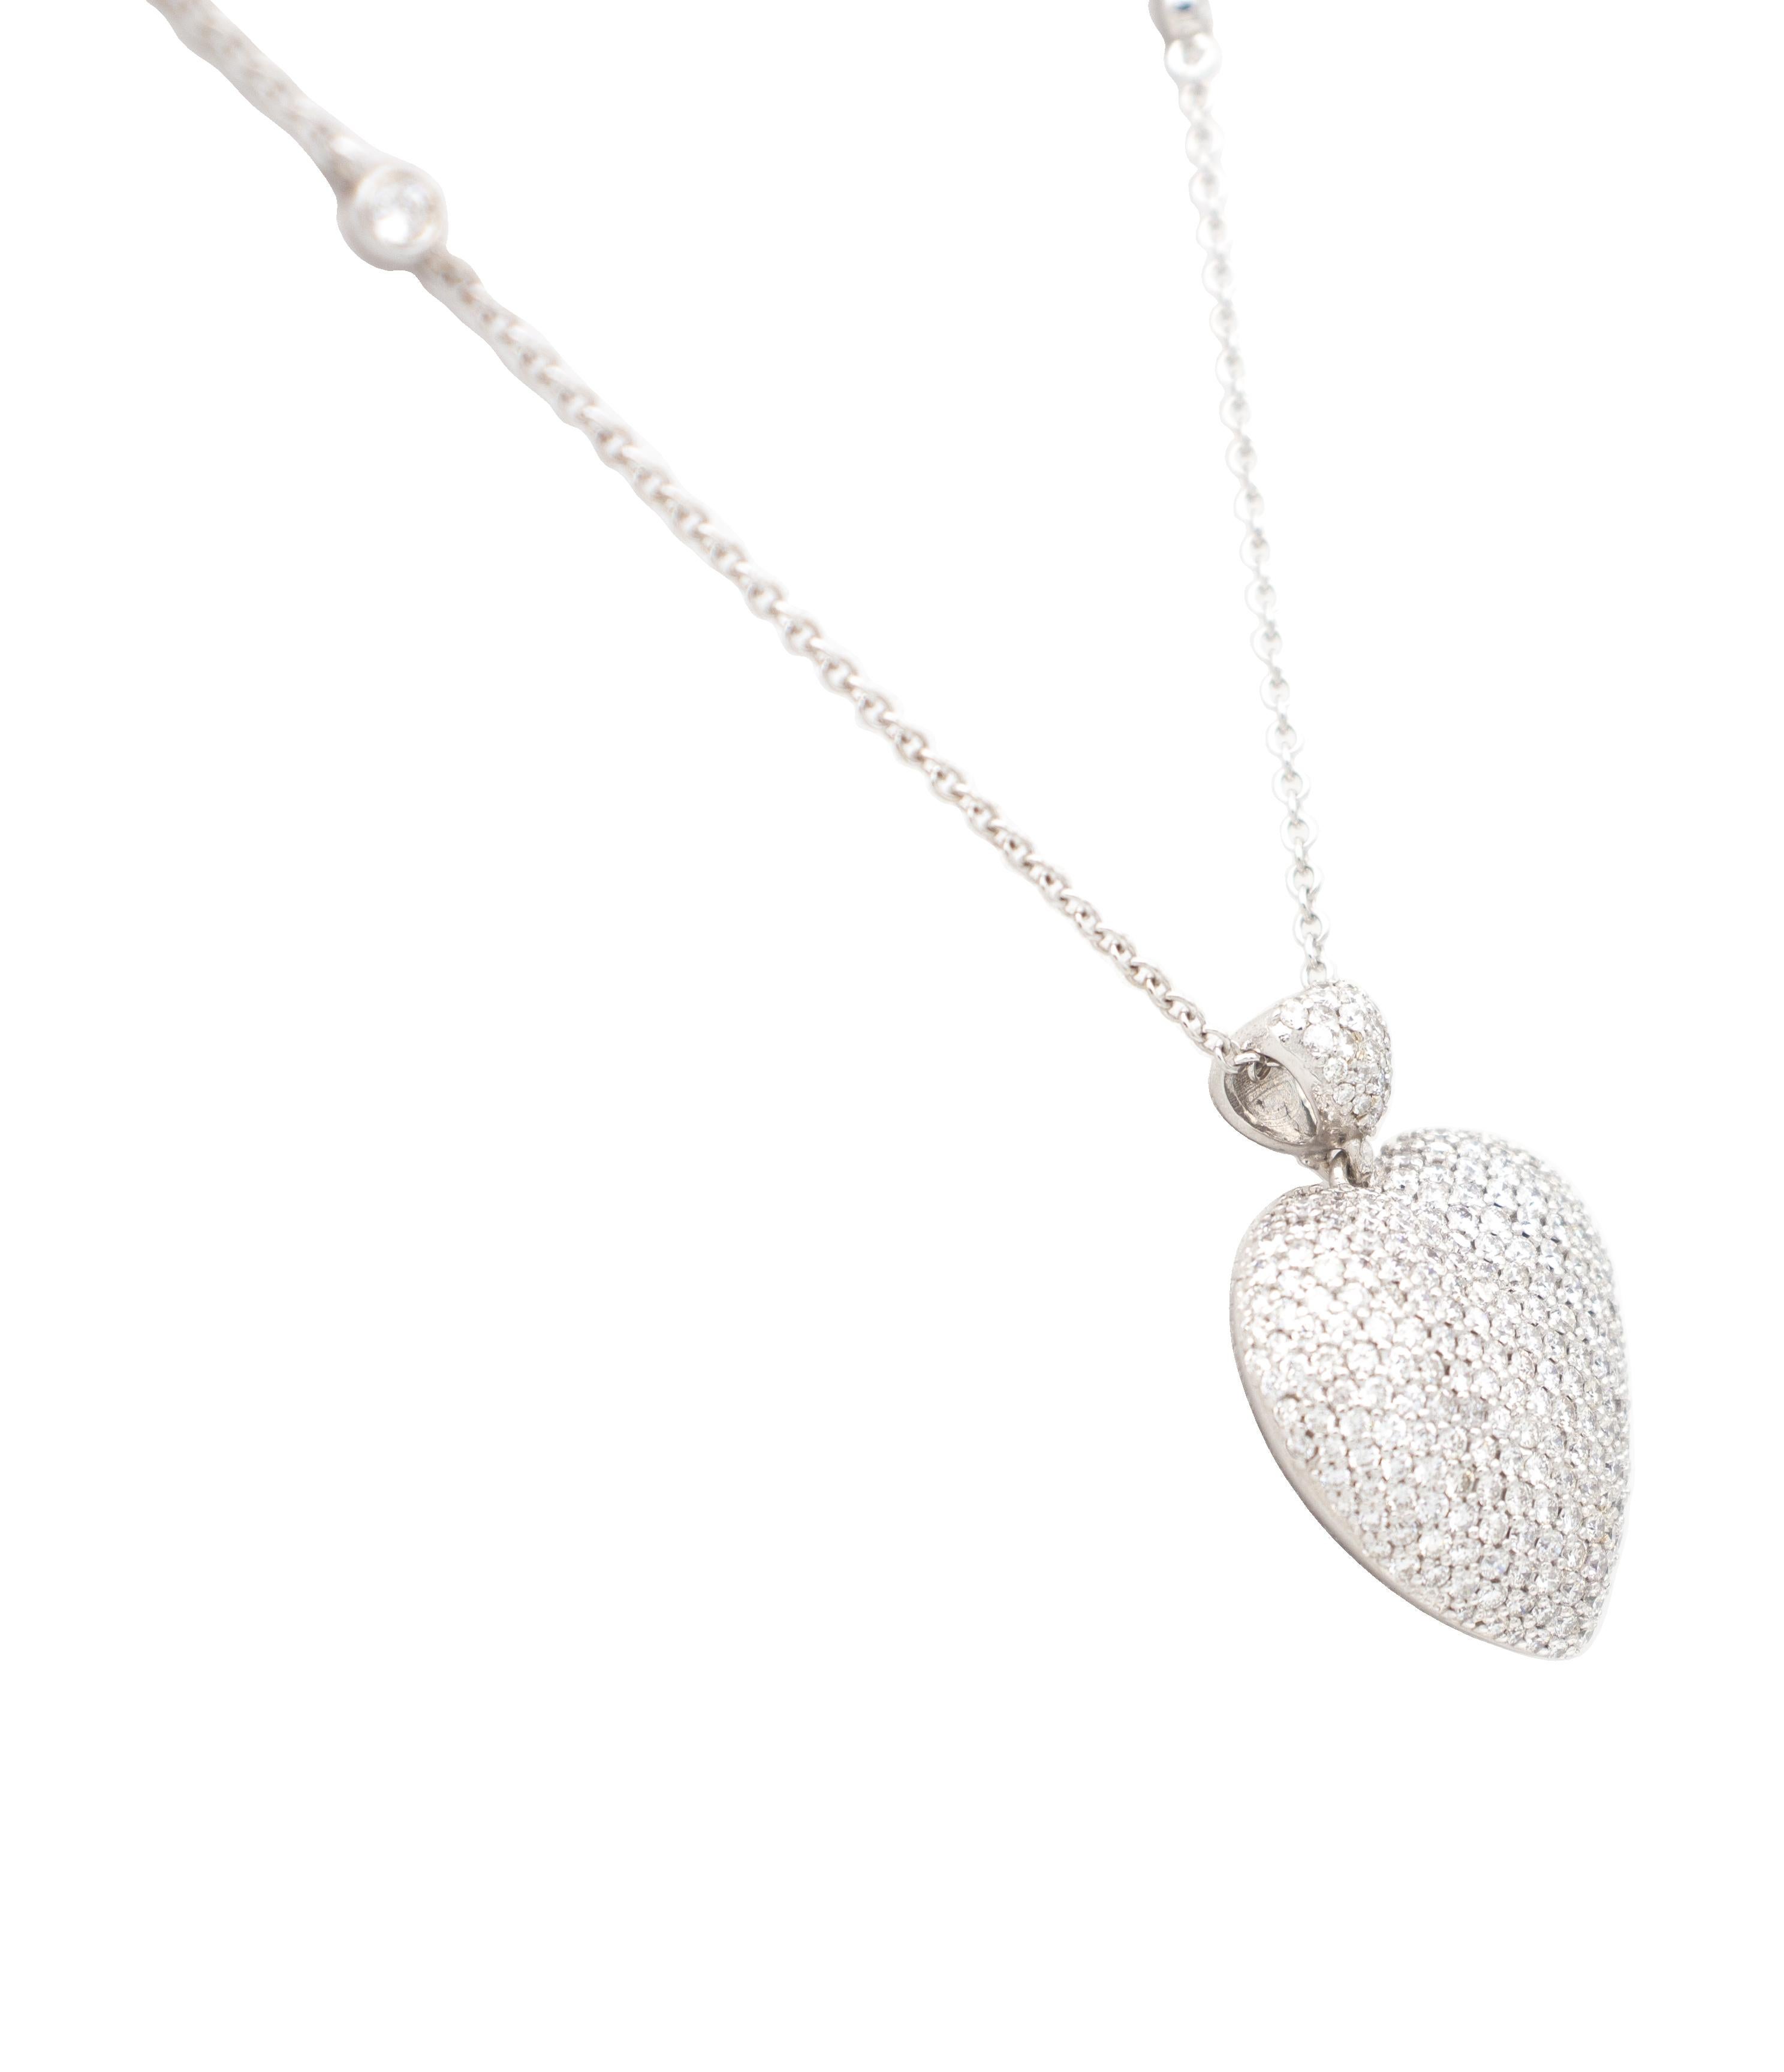 Women's or Men's 3.51 Ct White Diamonds, 18kt White Gold Heart Shape Pendant Necklace